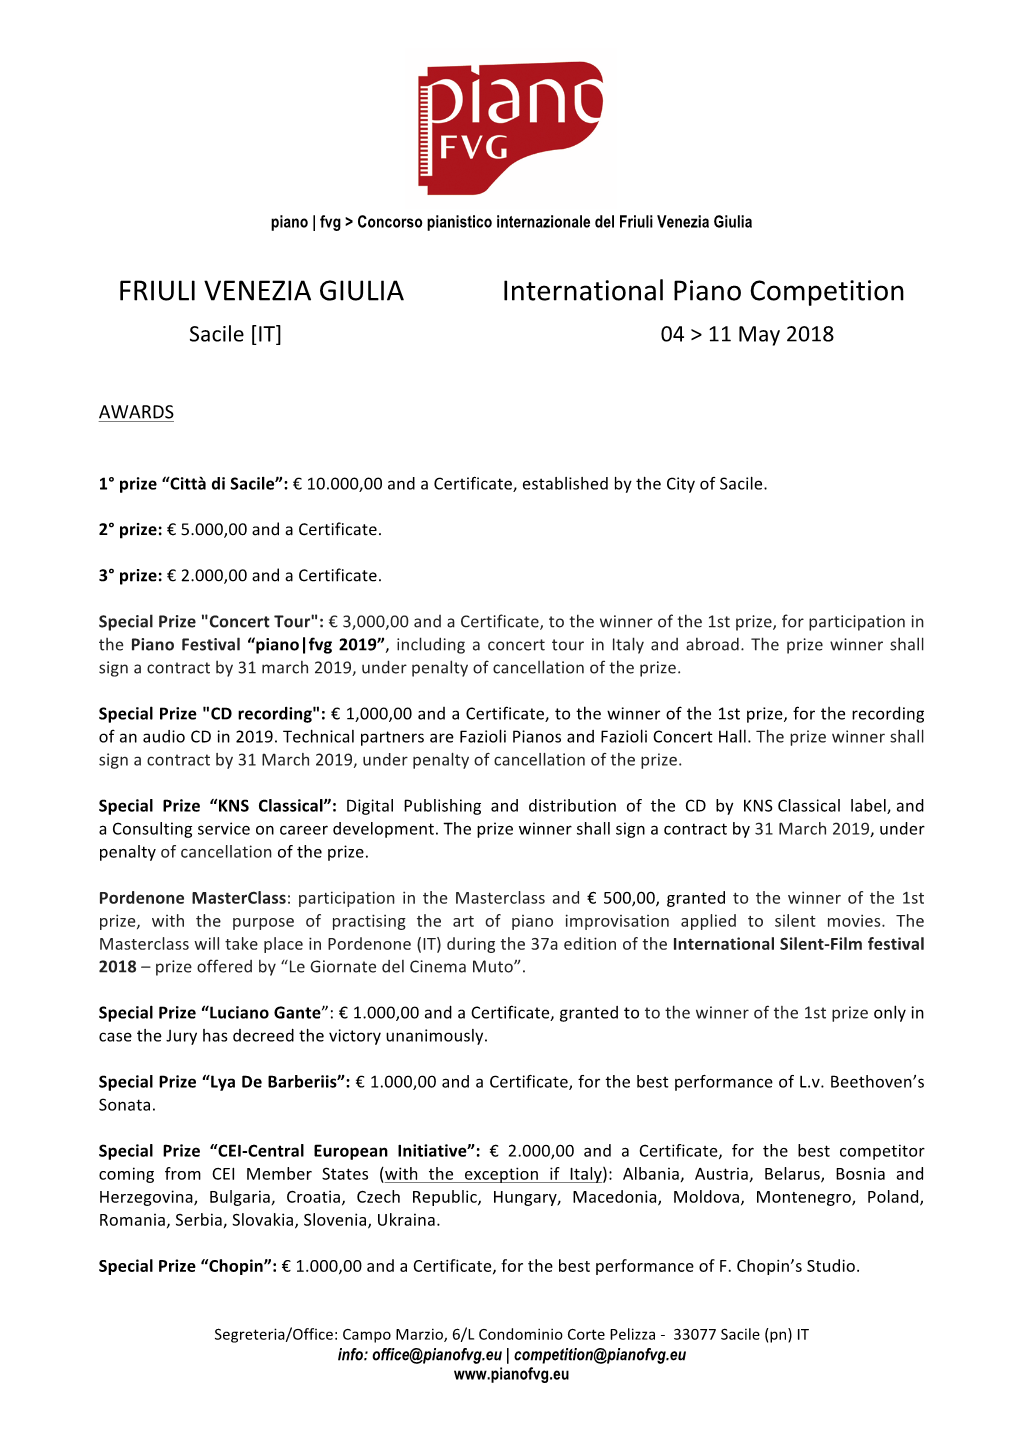 FRIULI VENEZIA GIULIA International Piano Competition Sacile [IT] 04 > 11 May 2018